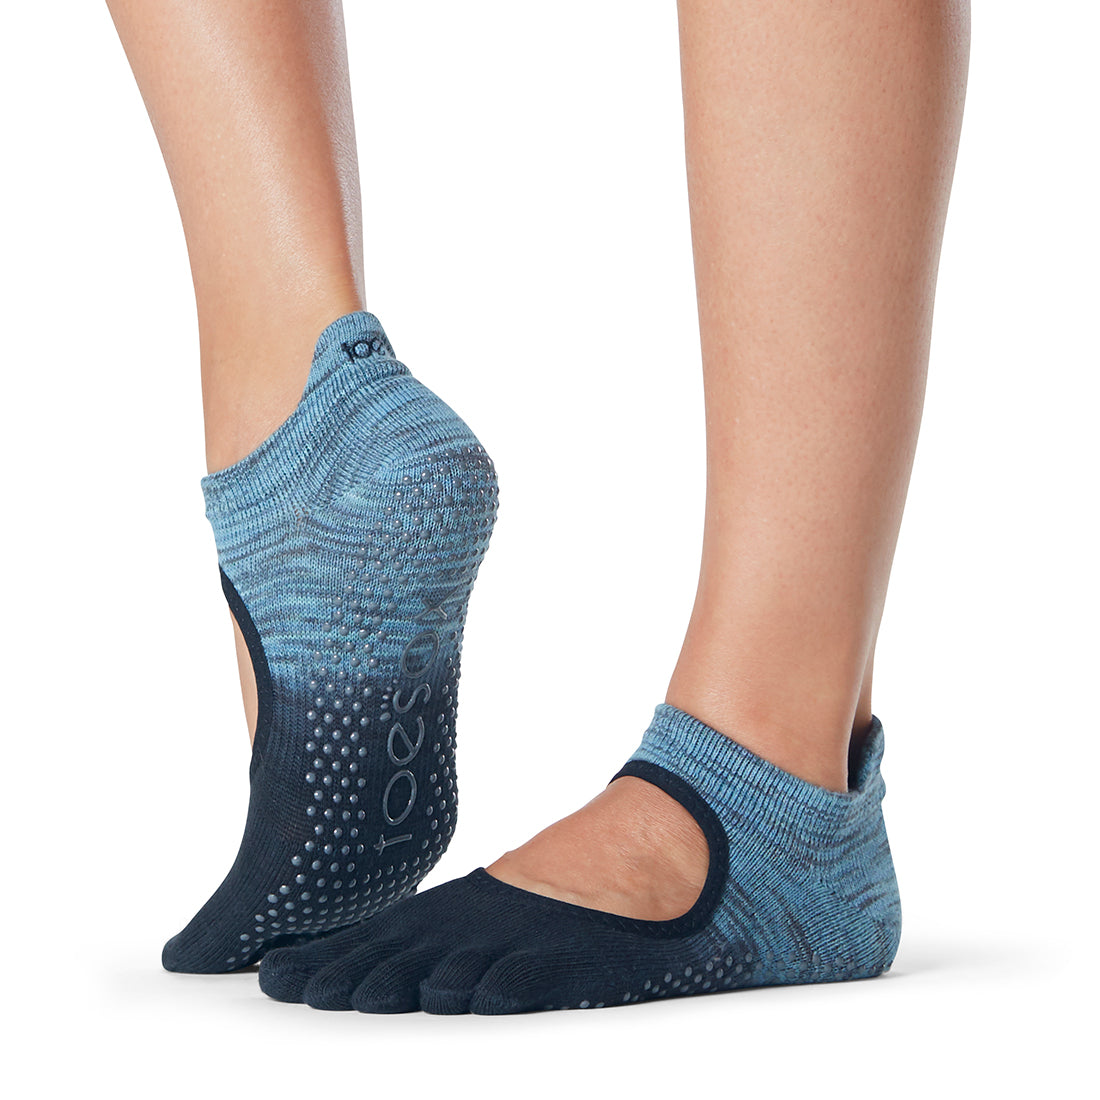 Be Happy - Grey Shine Half Toe Grip Socks (Barre / Pilates)